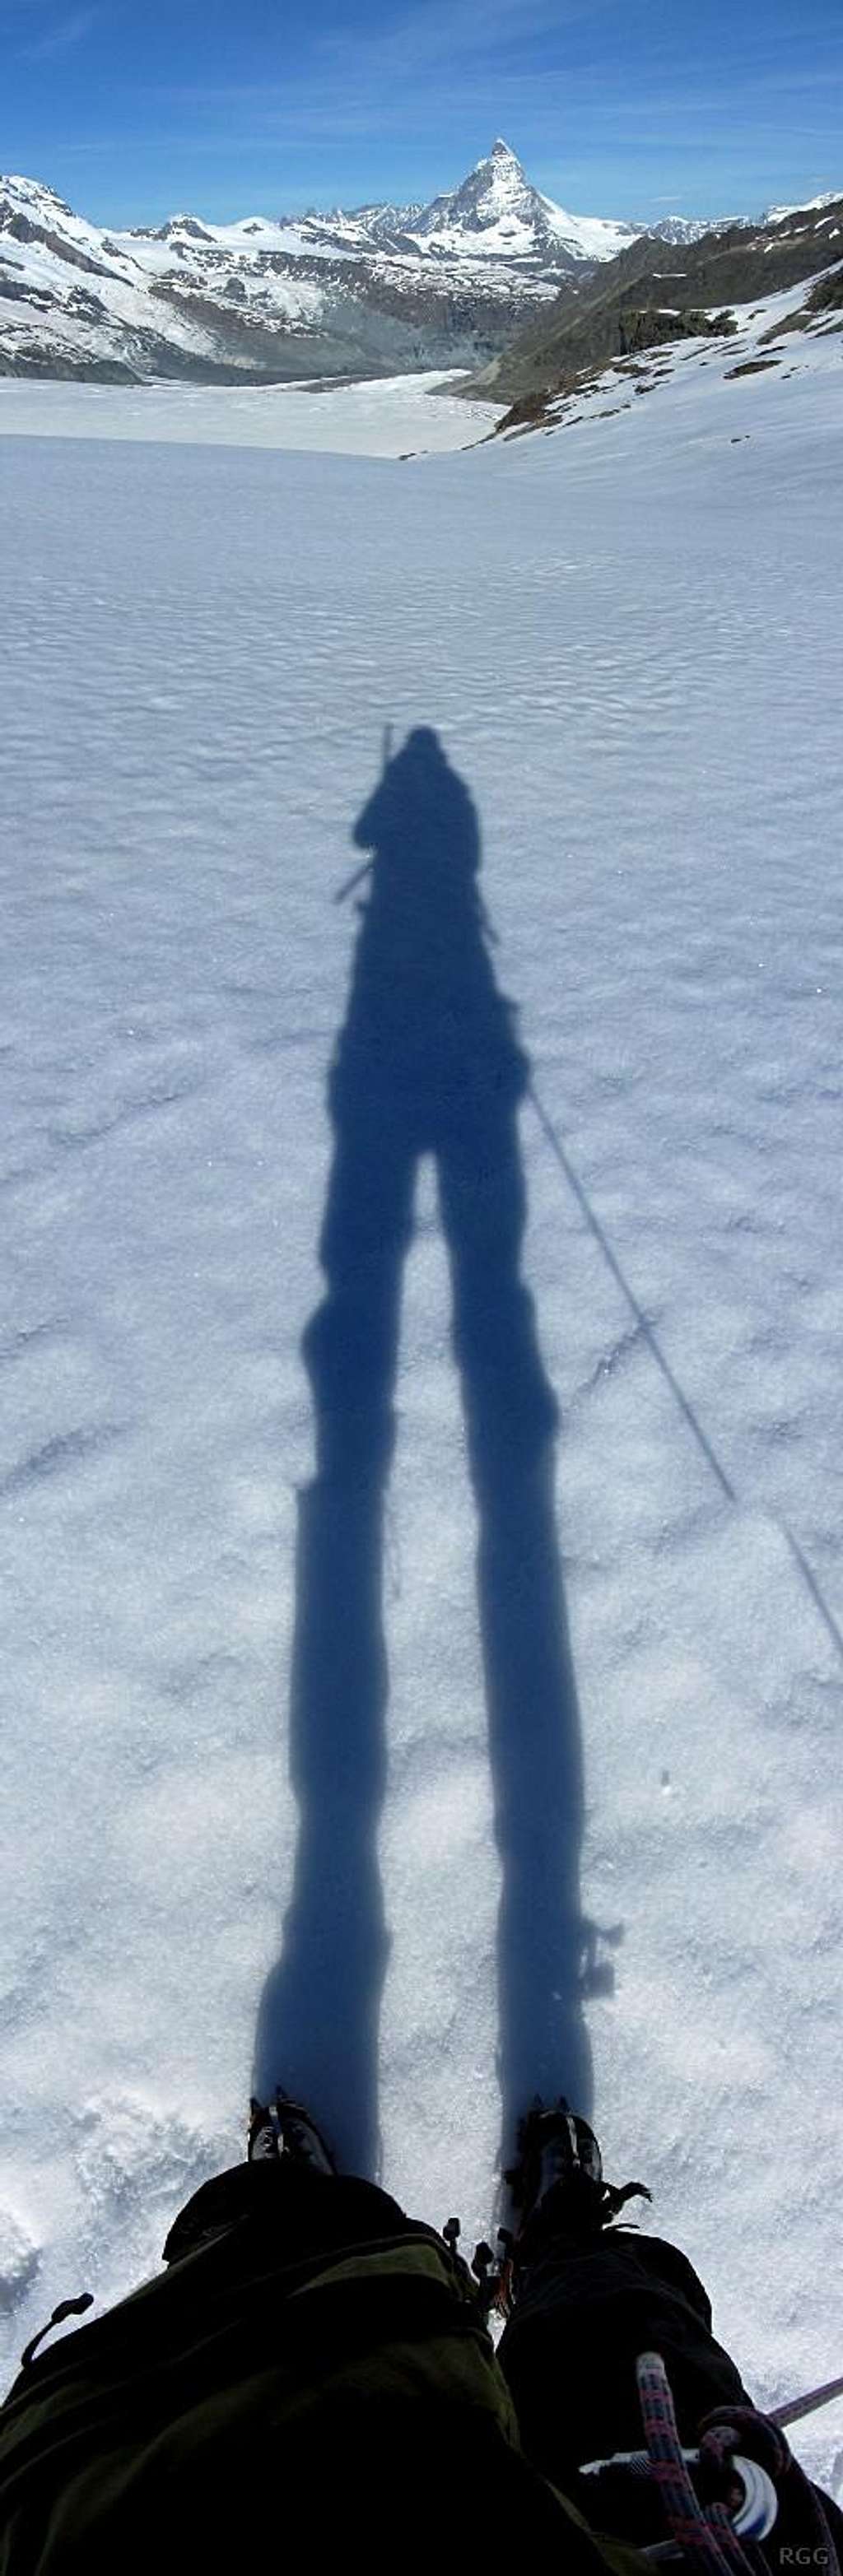 My shadow is muuuuuch bigger than the Matterhorn